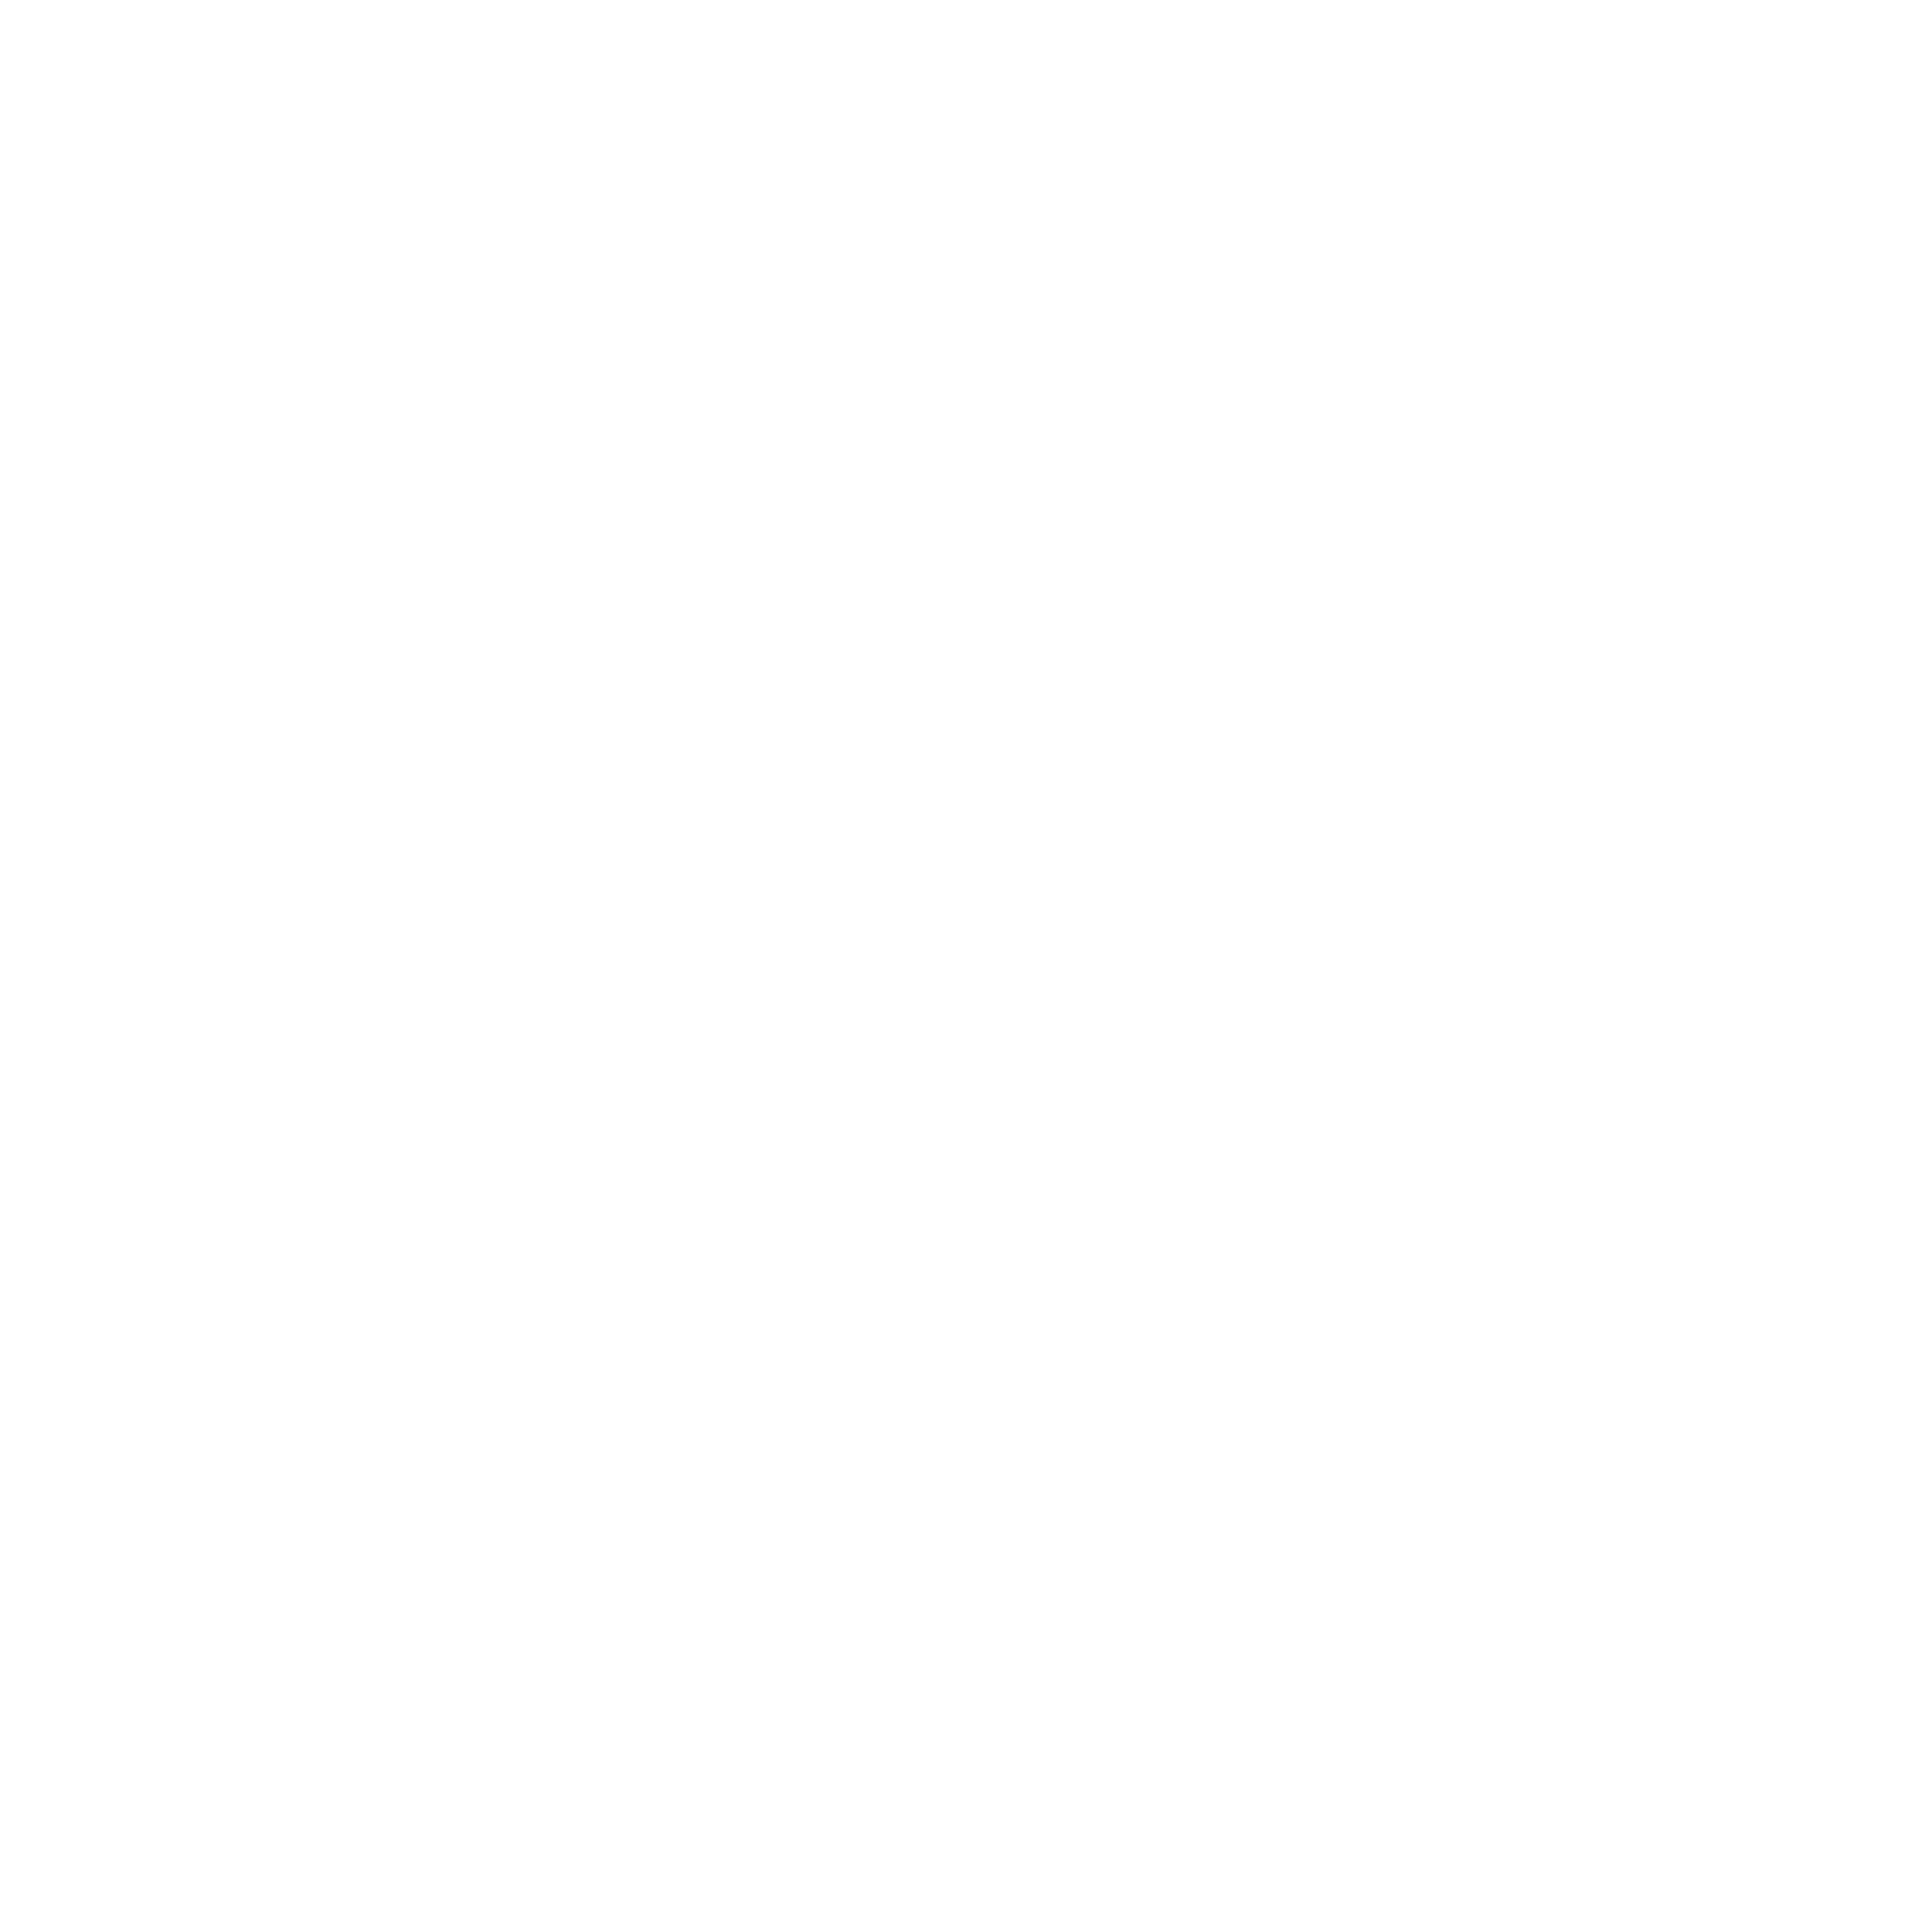 Owens Corning Logo - Owens Corning Logo PNG Transparent & SVG Vector - Freebie Supply